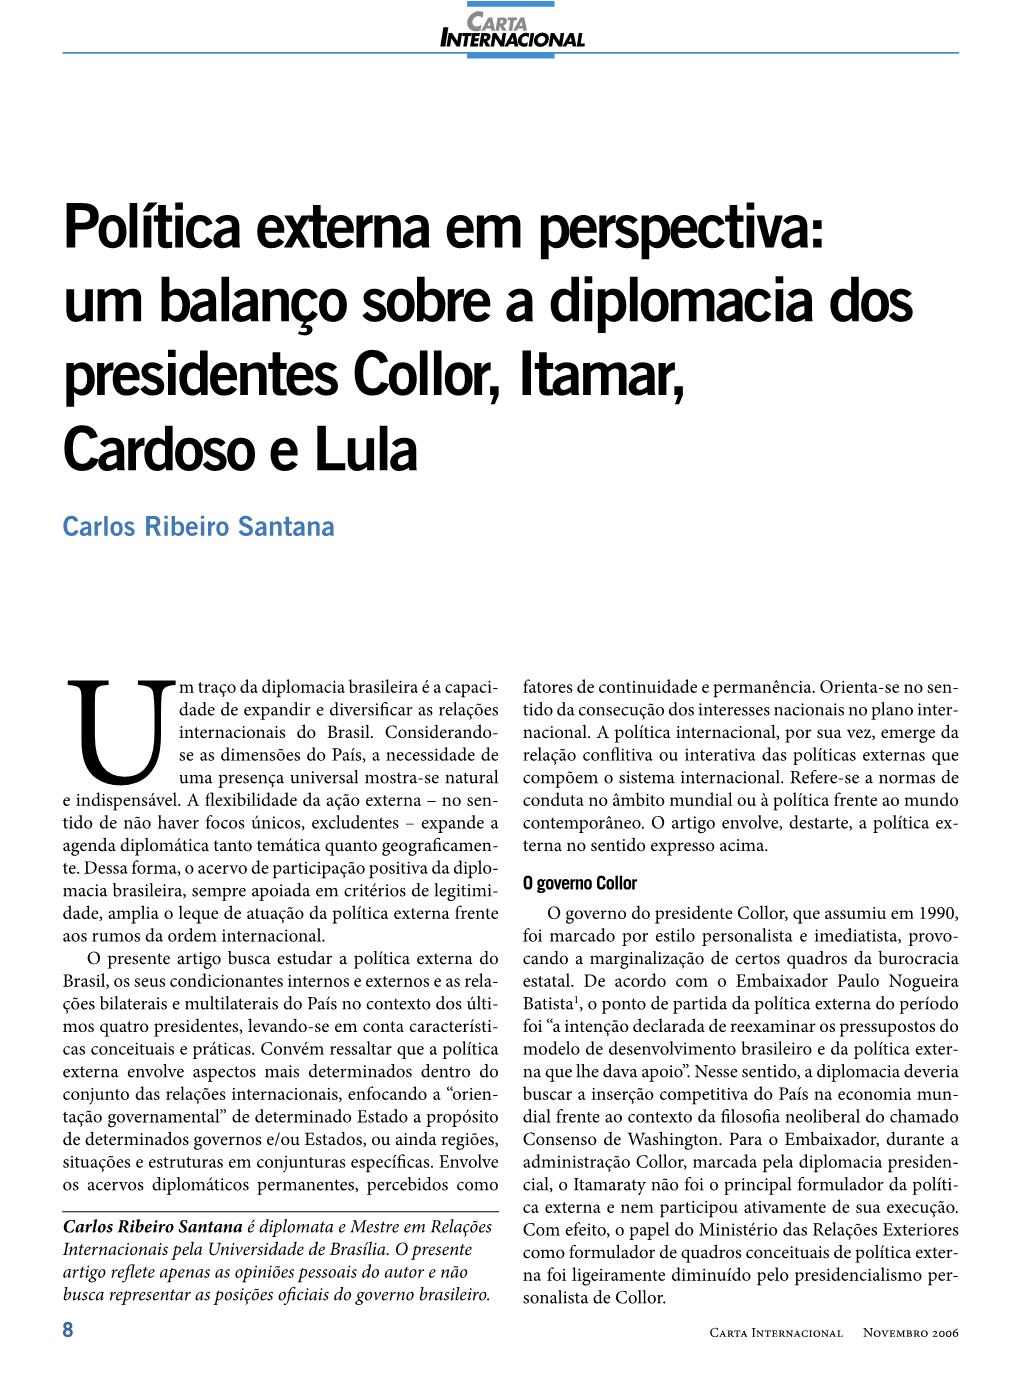 Um Balanço Sobre a Diplomacia Dos Presidentes Collor, Itamar, Cardoso E Lula